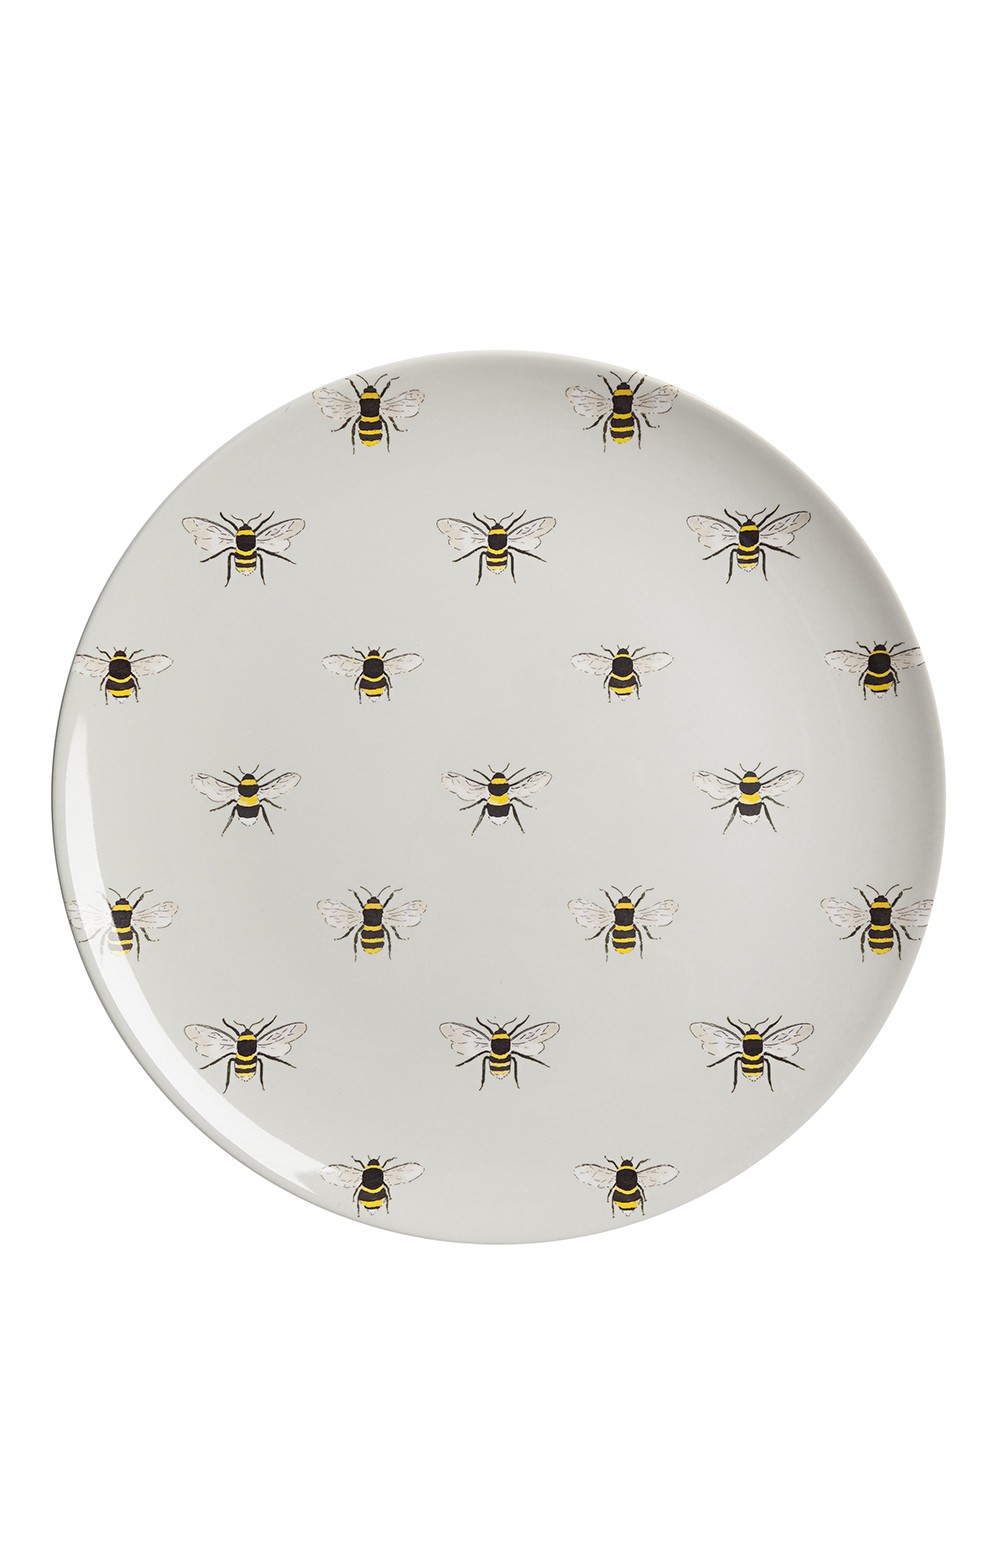  Melamine Plate, Bees